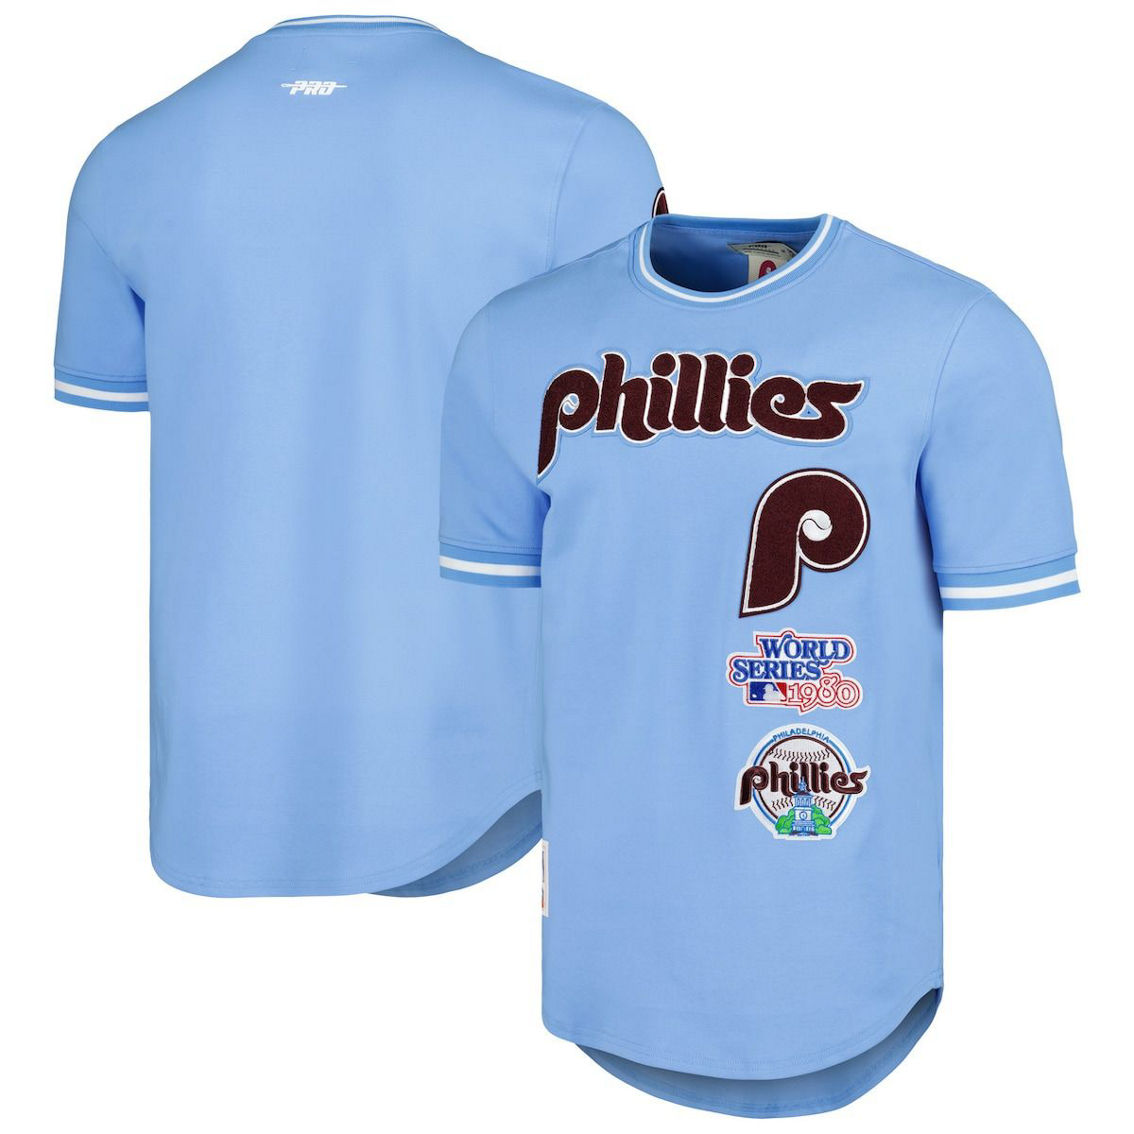 phillies bike jersey